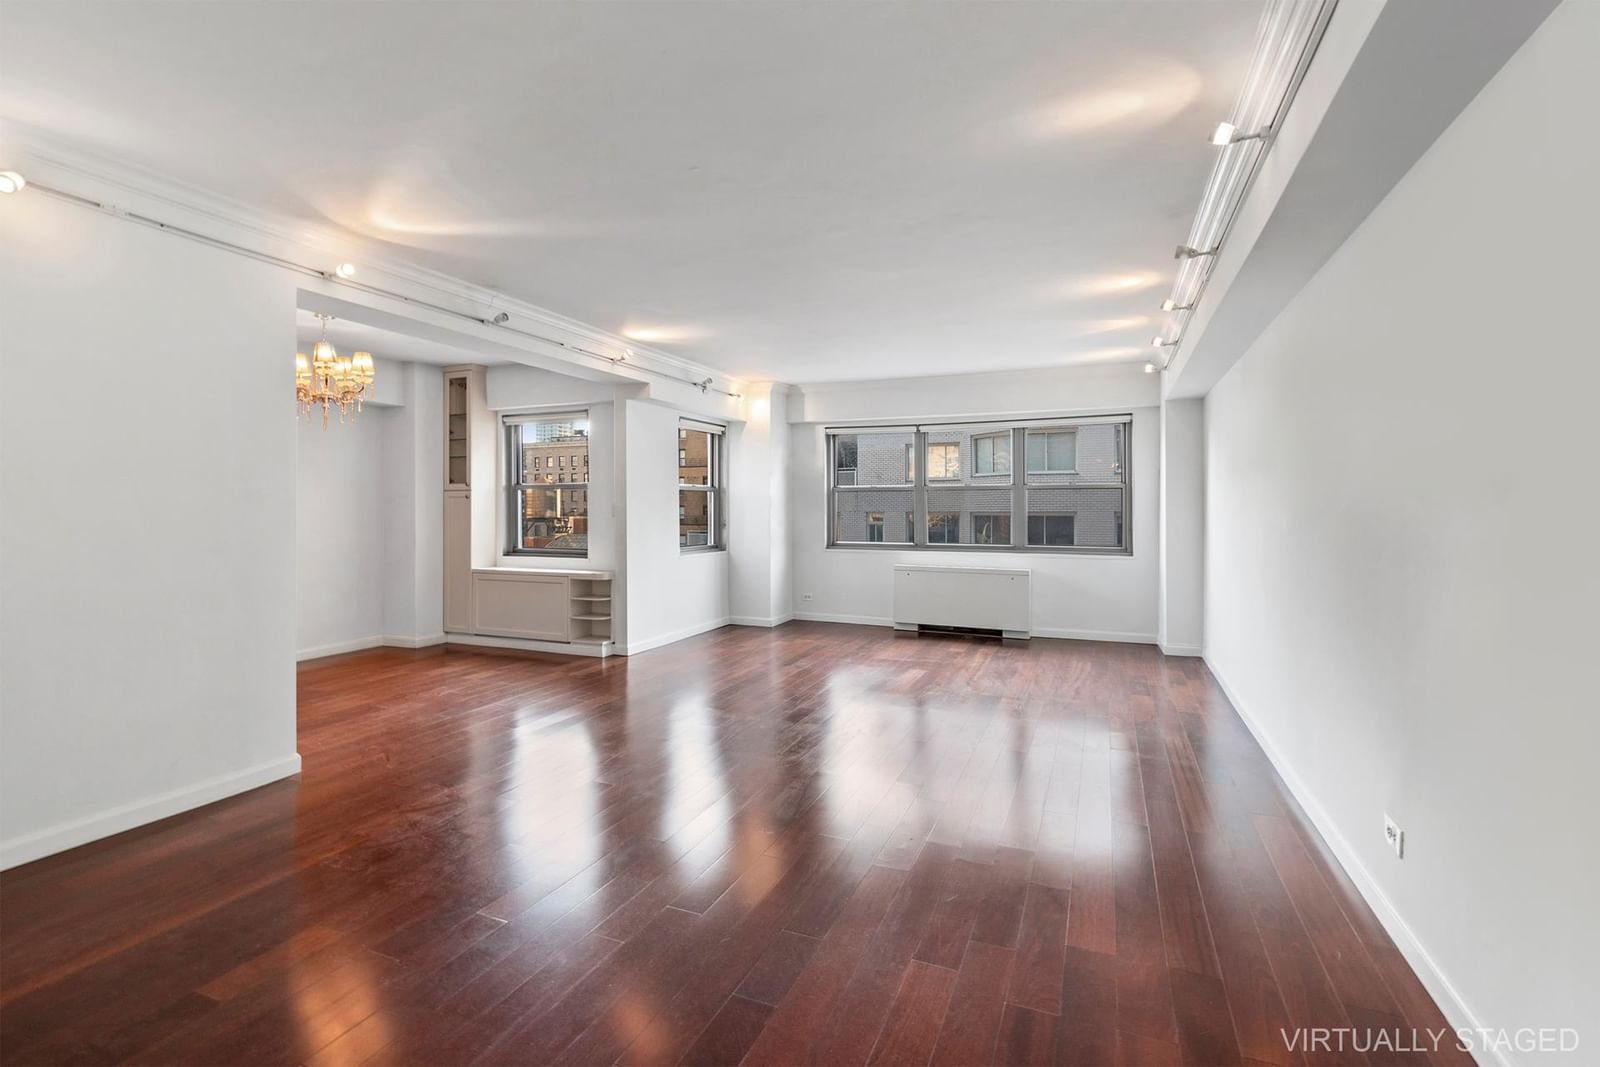 Real estate property located at 27 65th #14E, New York, New York City, NY